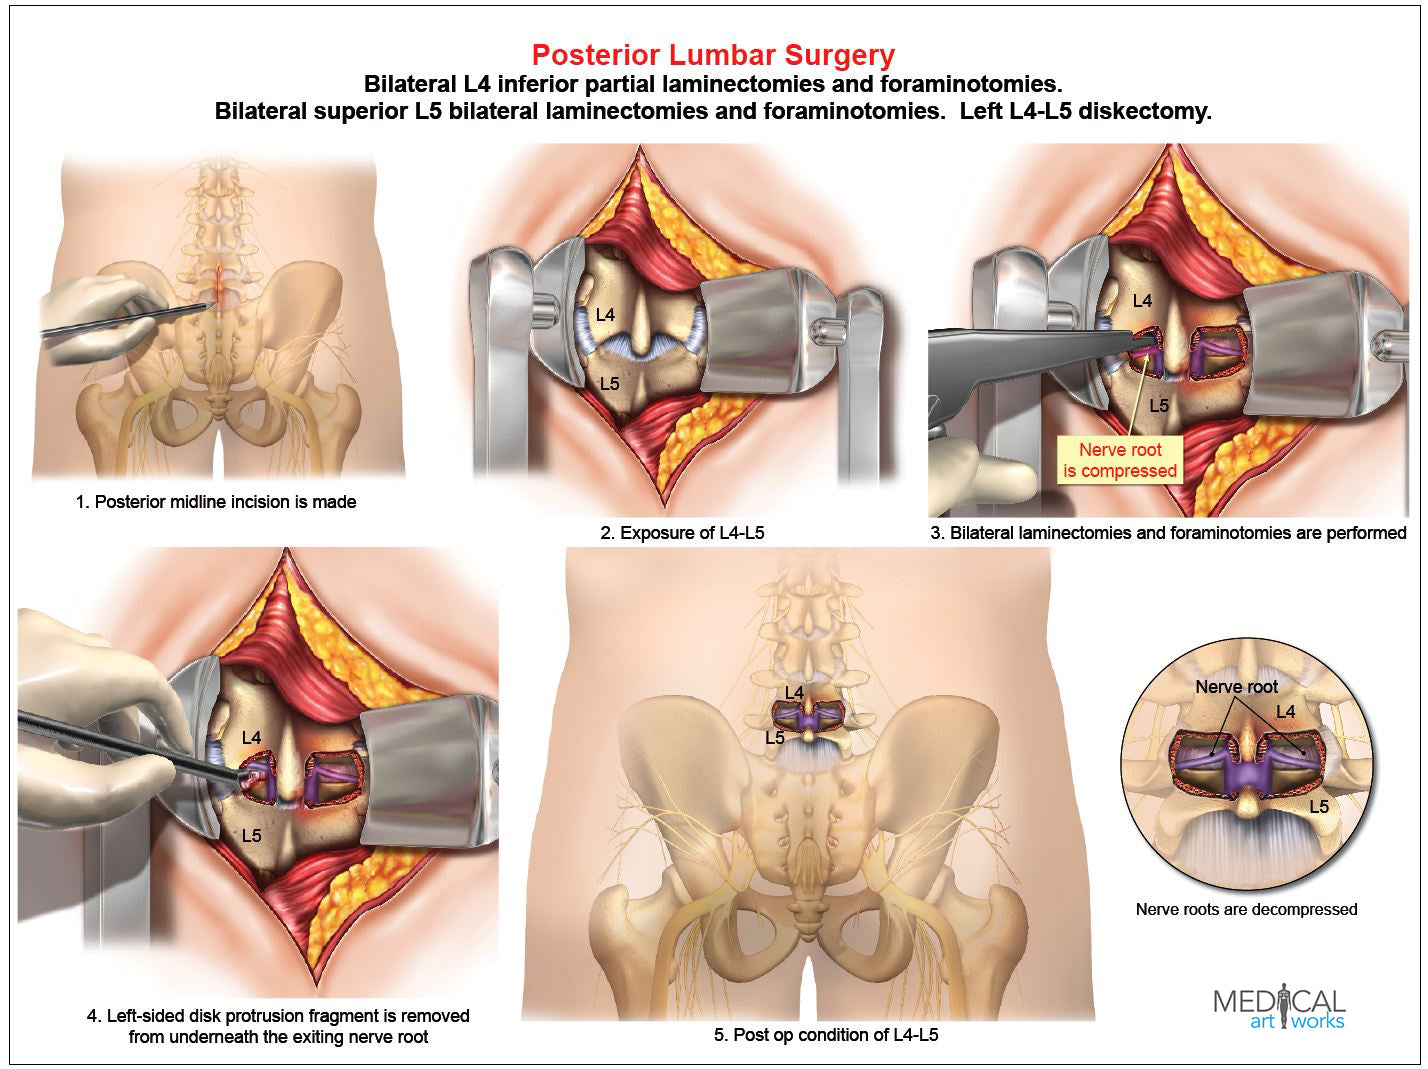 1 Level - L4-L5 Lumbar spine bilateral laminectomies - Foraminotomies - Diskectomy